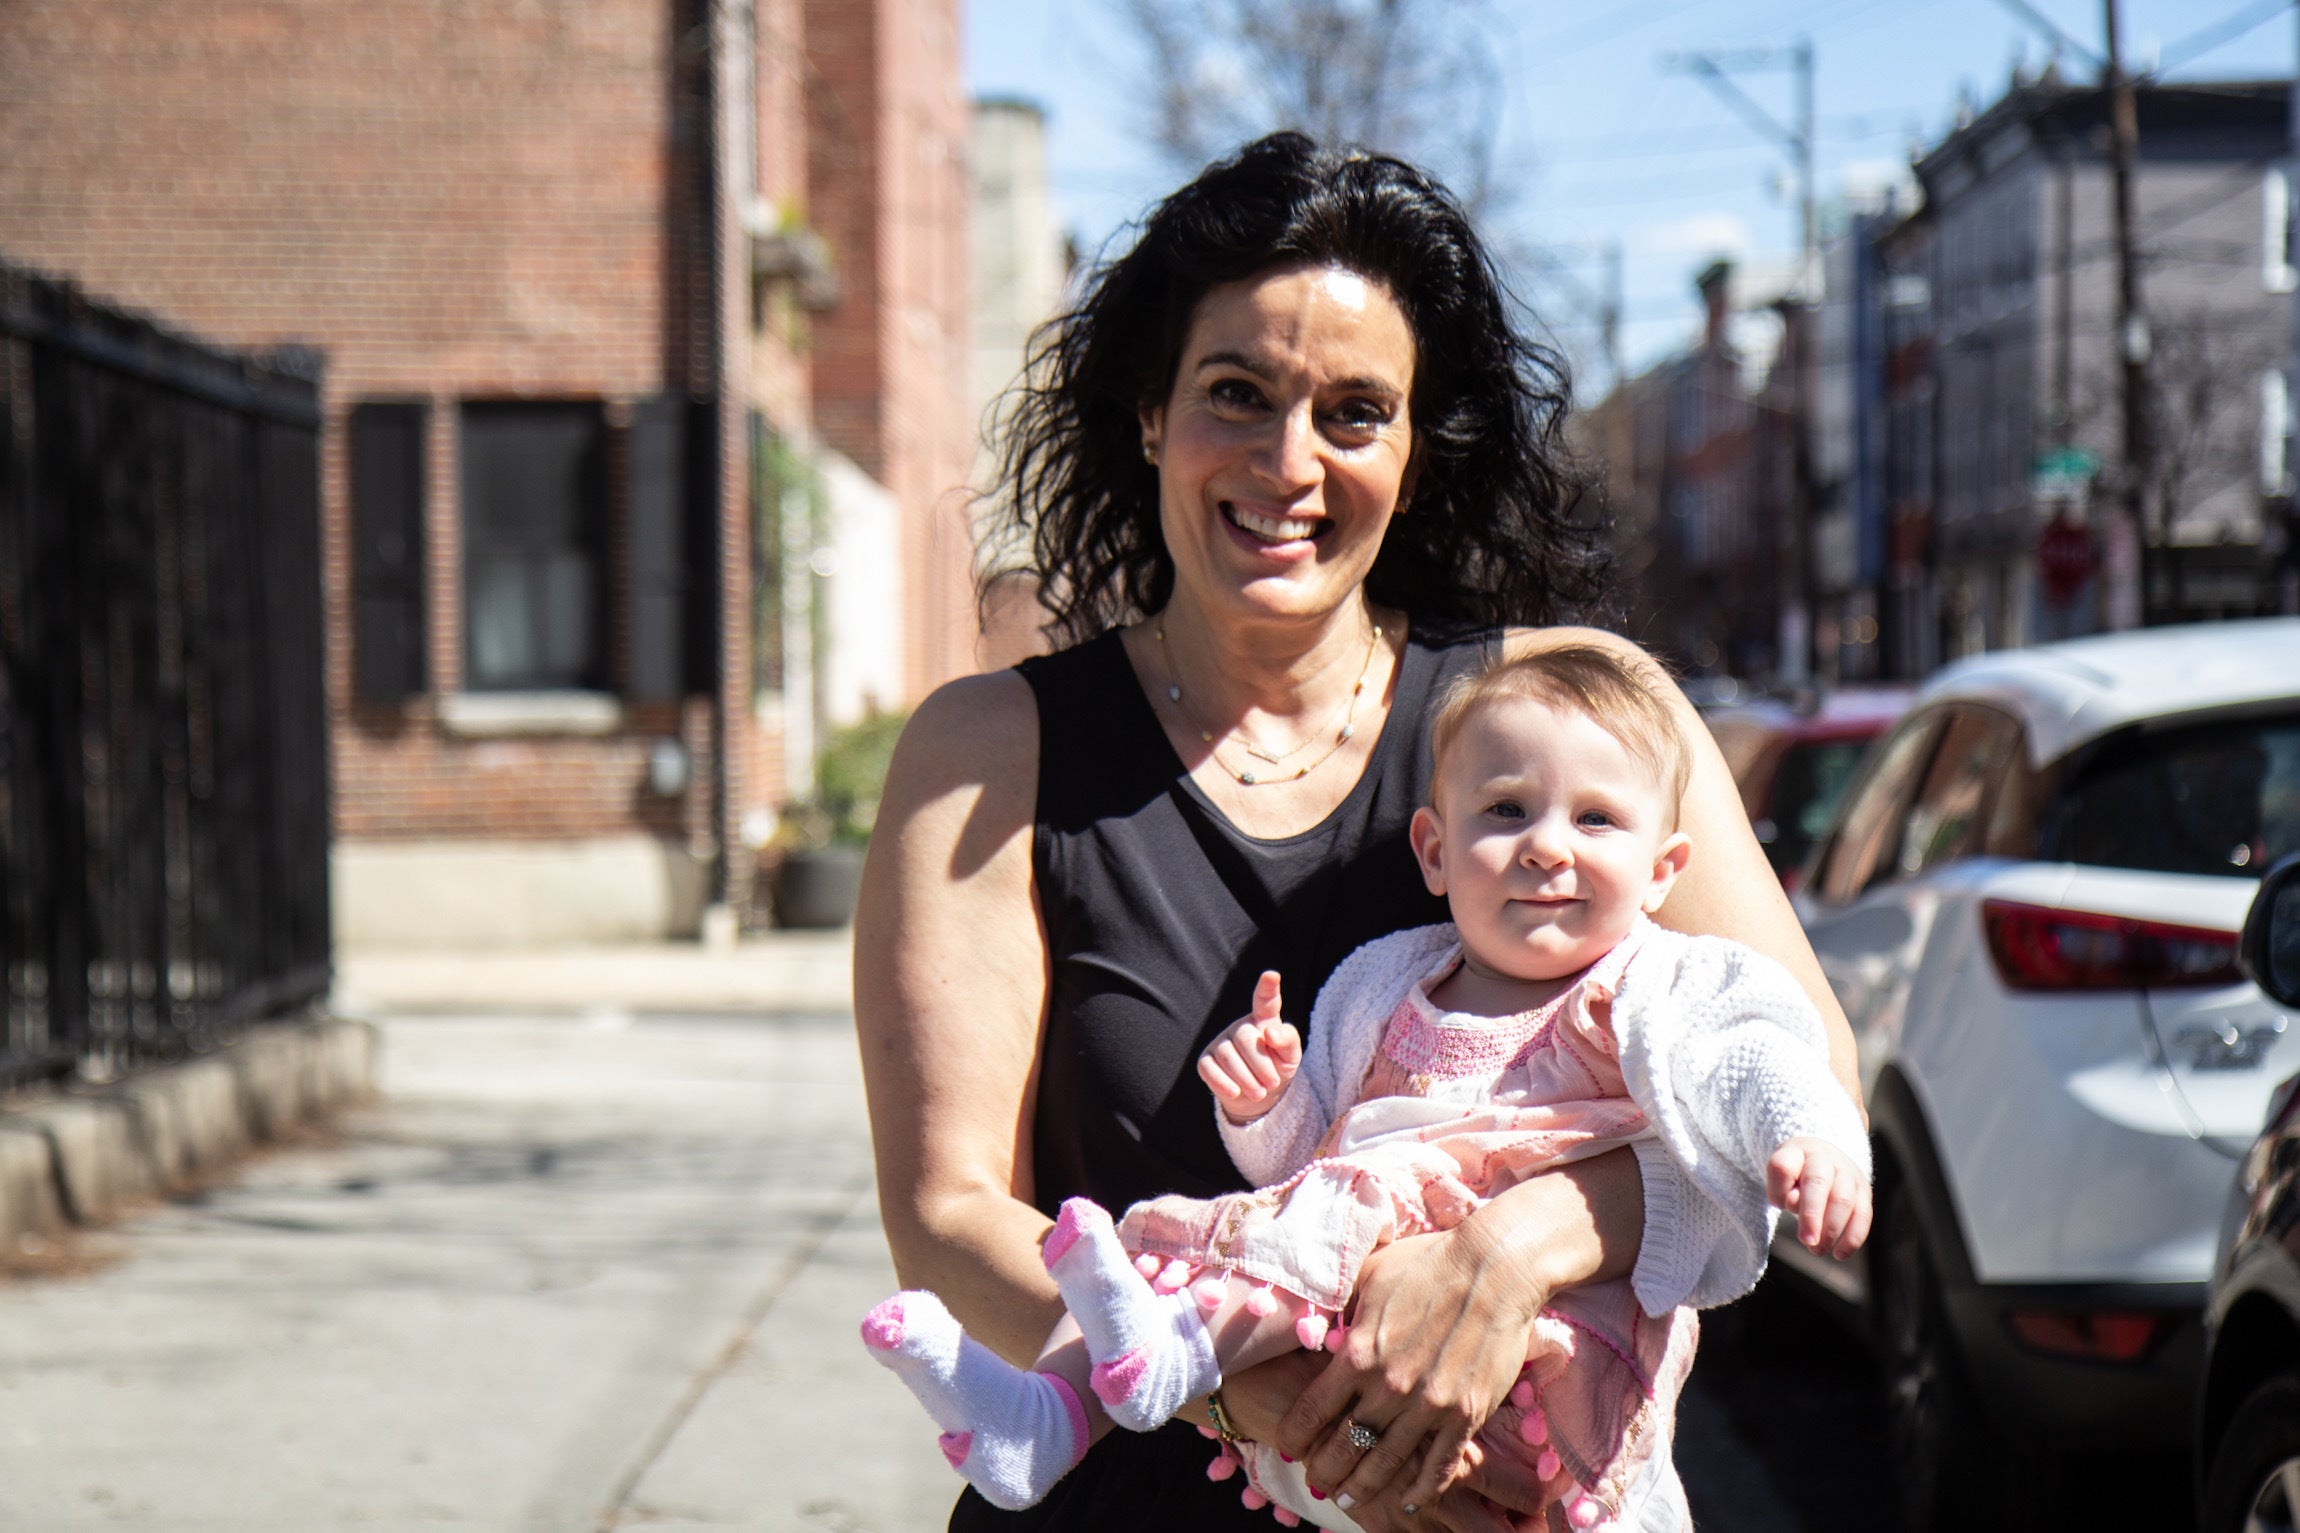 Blair Pomerantz and her 8-month-old daughter Violet